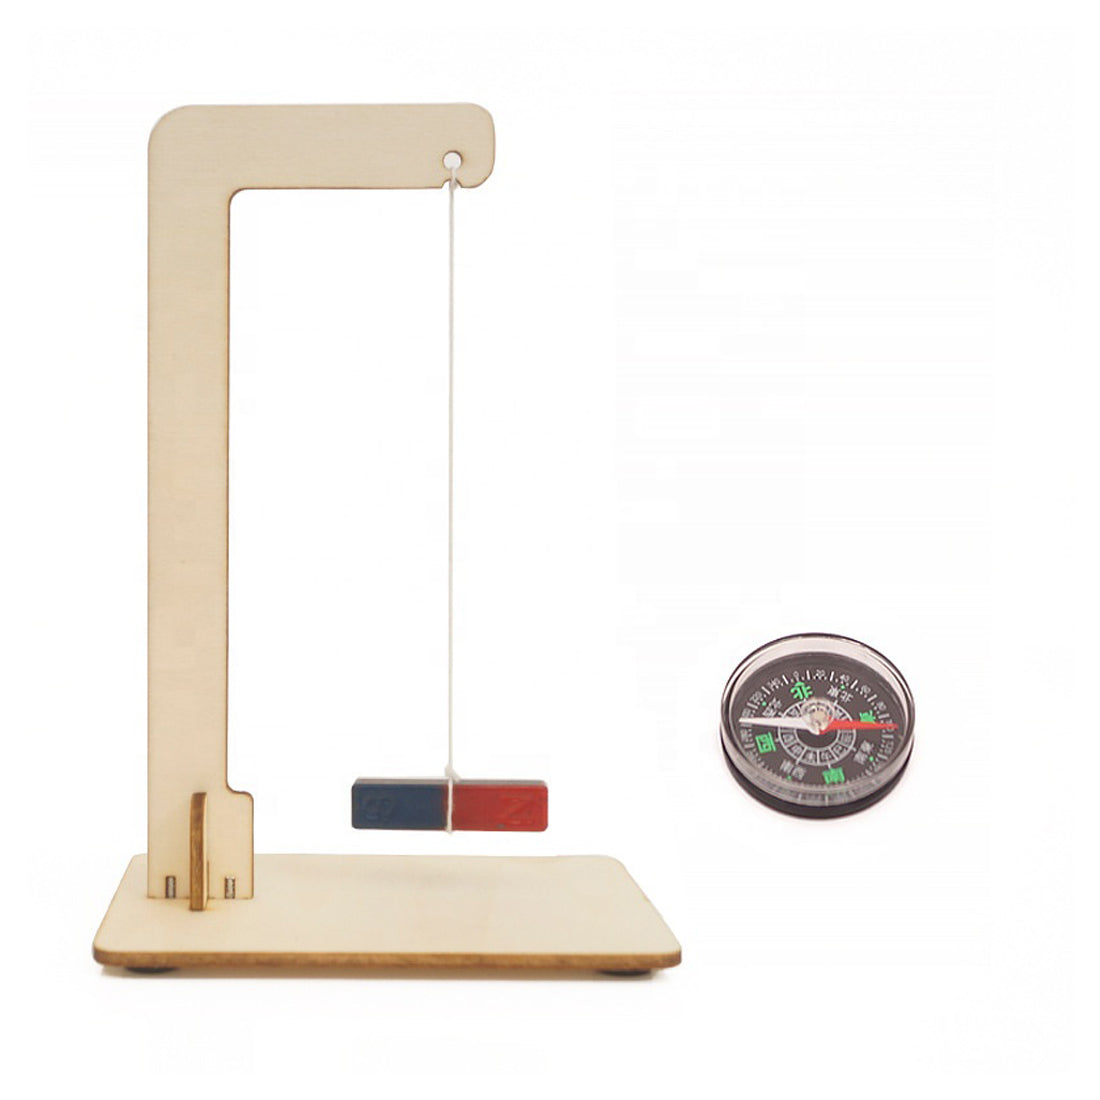 diy-stem-learning-educational-physics-science-mini-kids-toy-compass.jpg